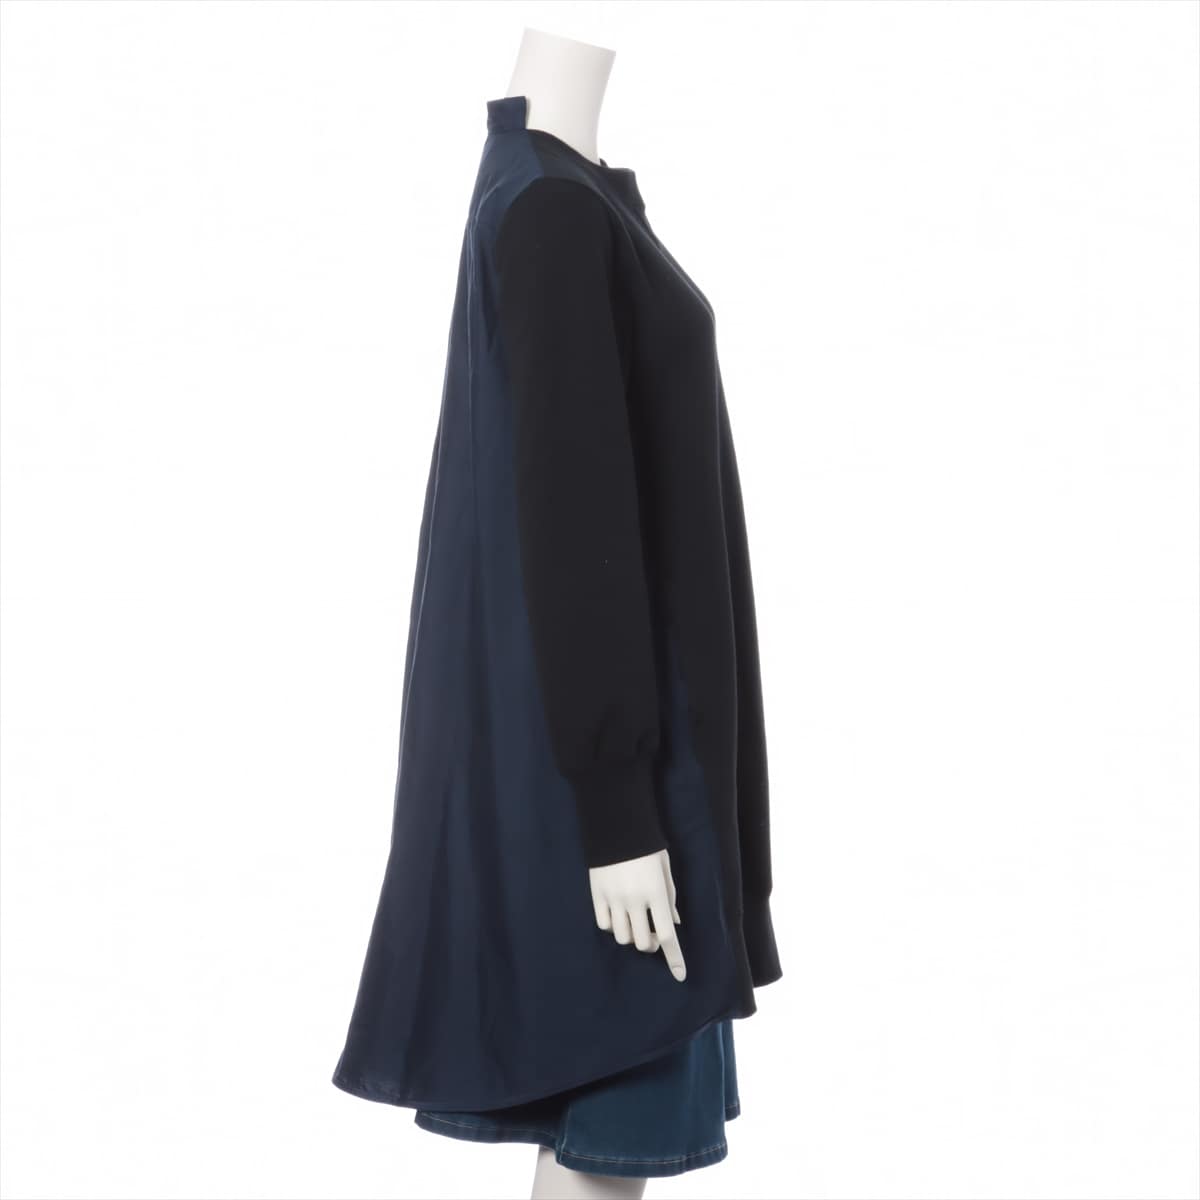 Sacai 17 years Basic knitted fabric Dress 1 Ladies' Black x Navy